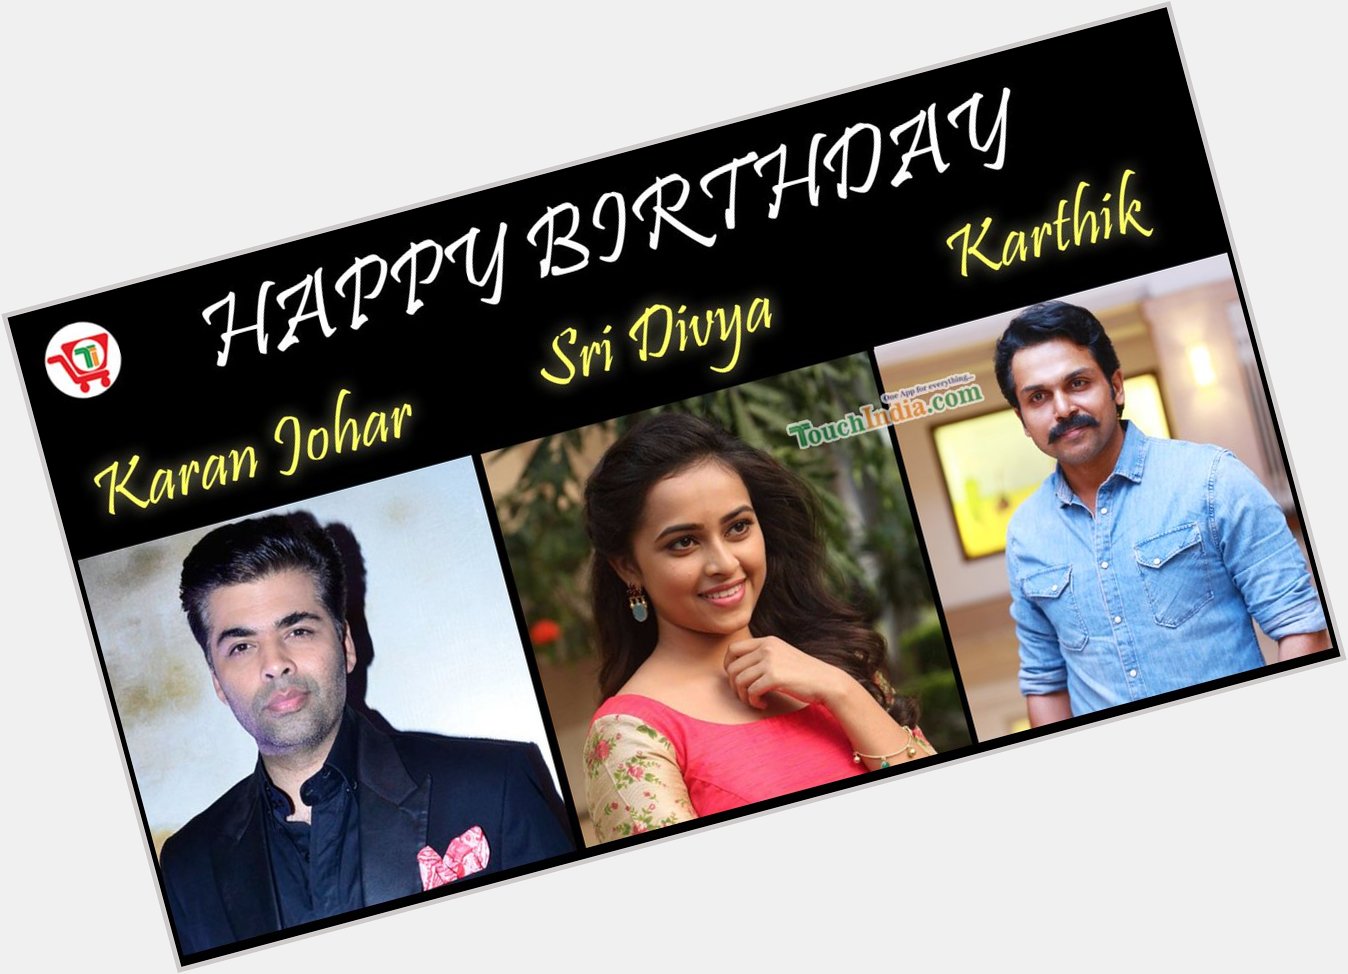 Happy Birthday Karan Johar, Sri Divya and Karthi.   